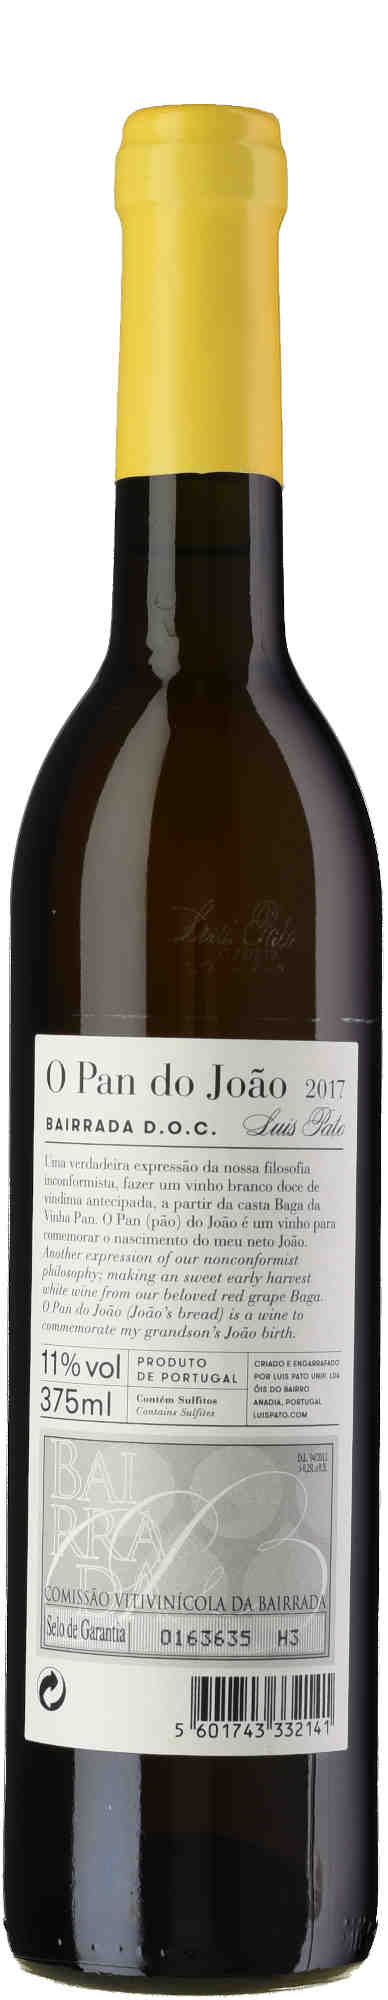 Luis-Pato-O-Pan-de-Joao-2017-back